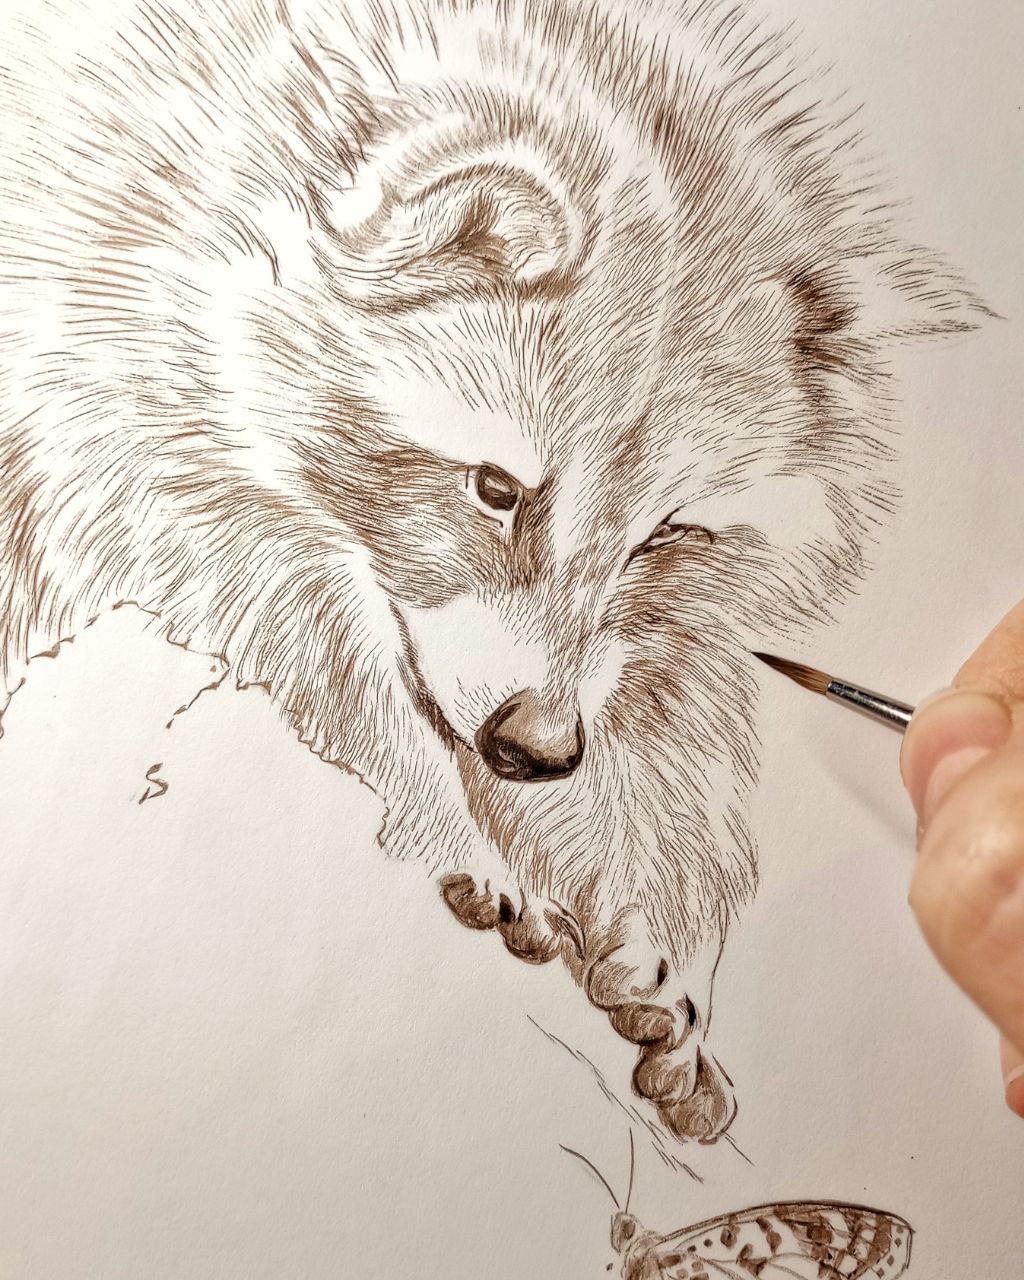 New Raccoon Painting in Progress